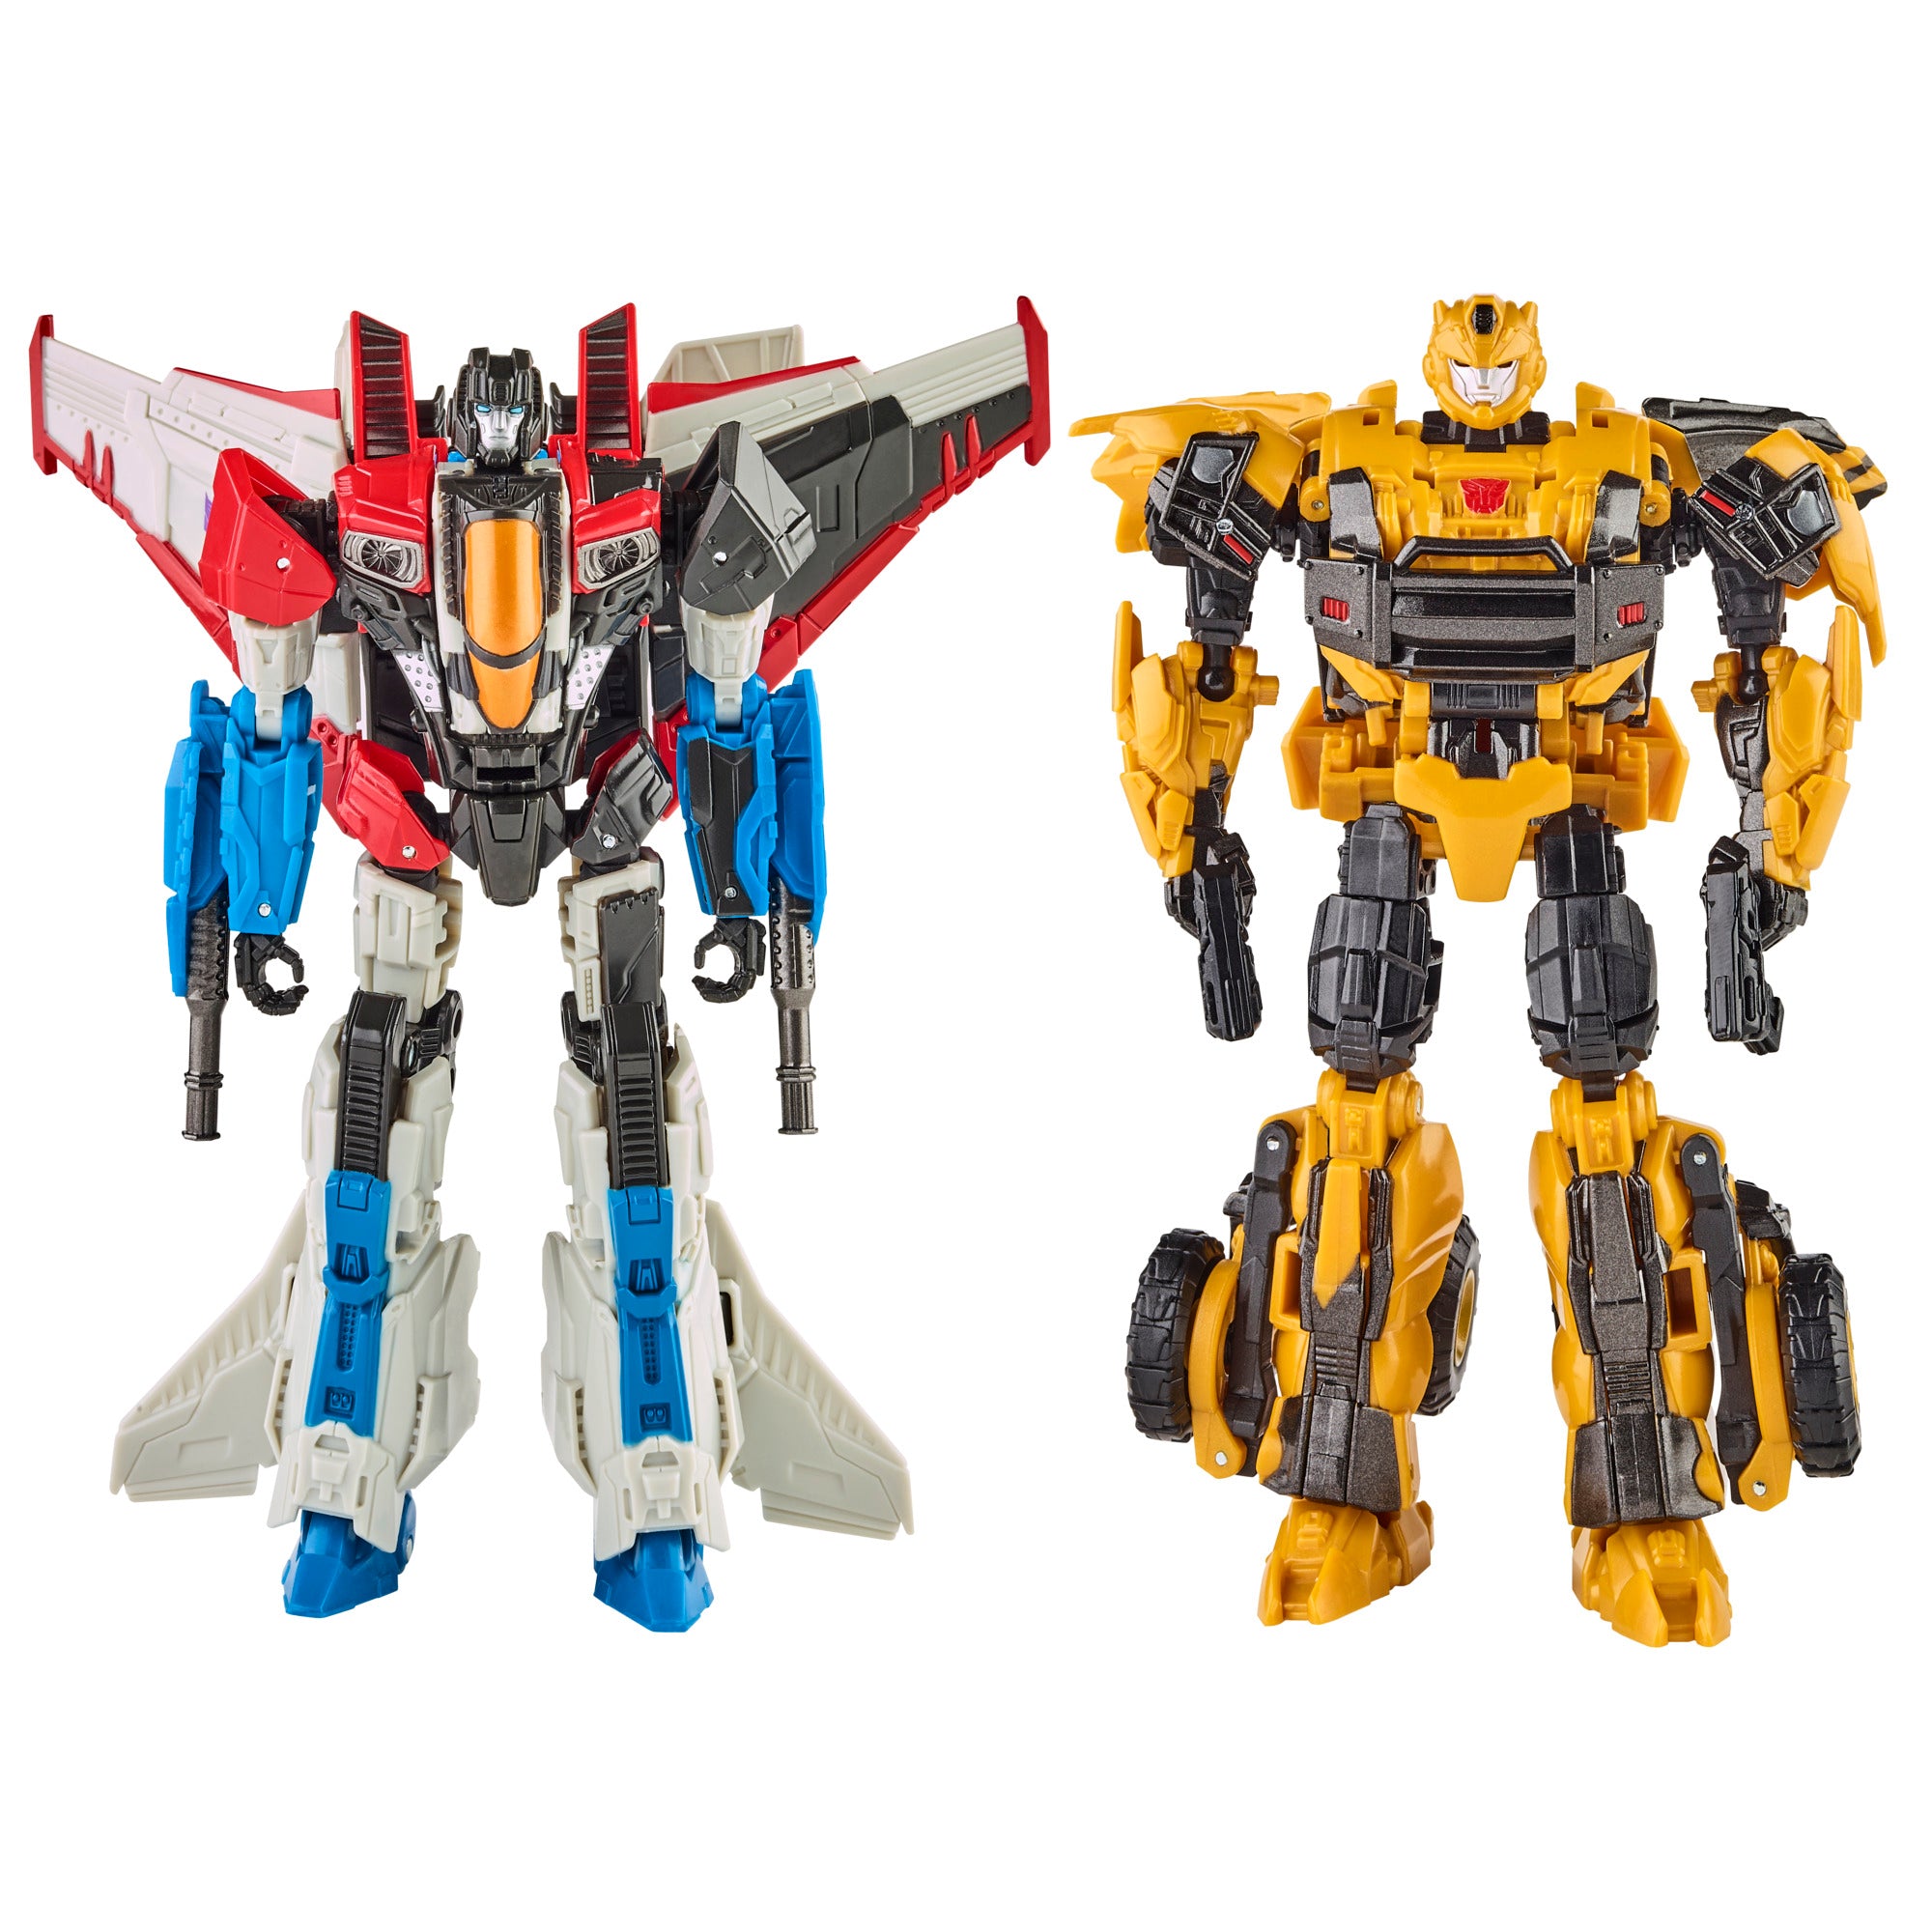 Transformers: Reactivate Bumblebee and Starscream – Hasbro Pulse